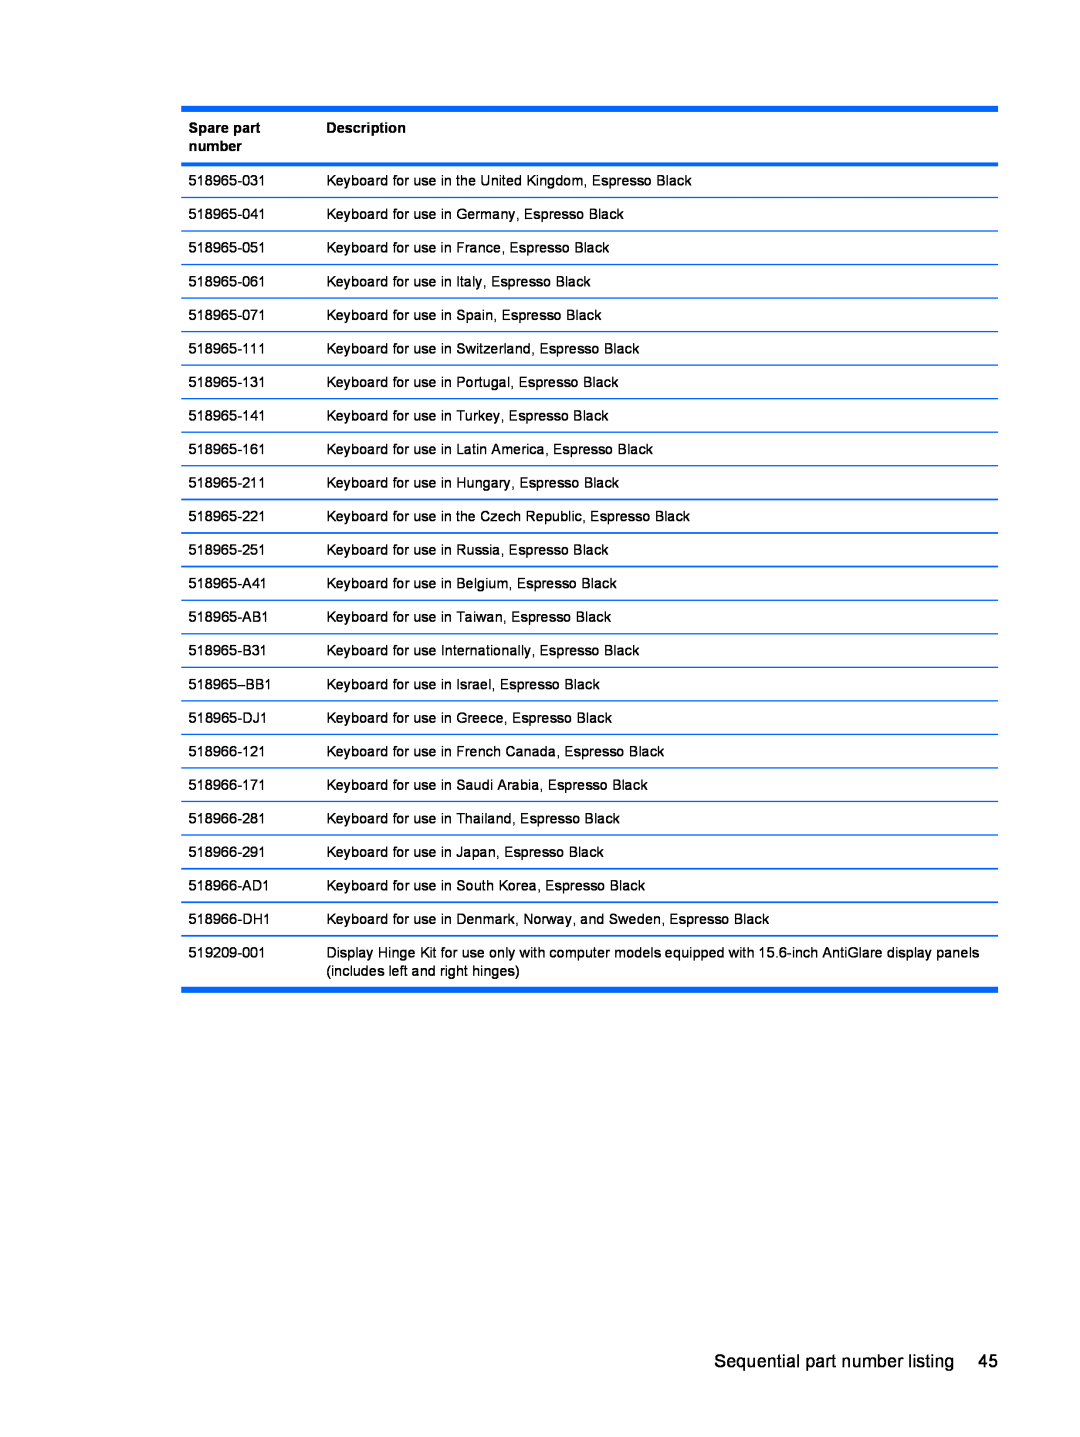 HP DV6 manual Sequential part number listing, Spare part, Description 